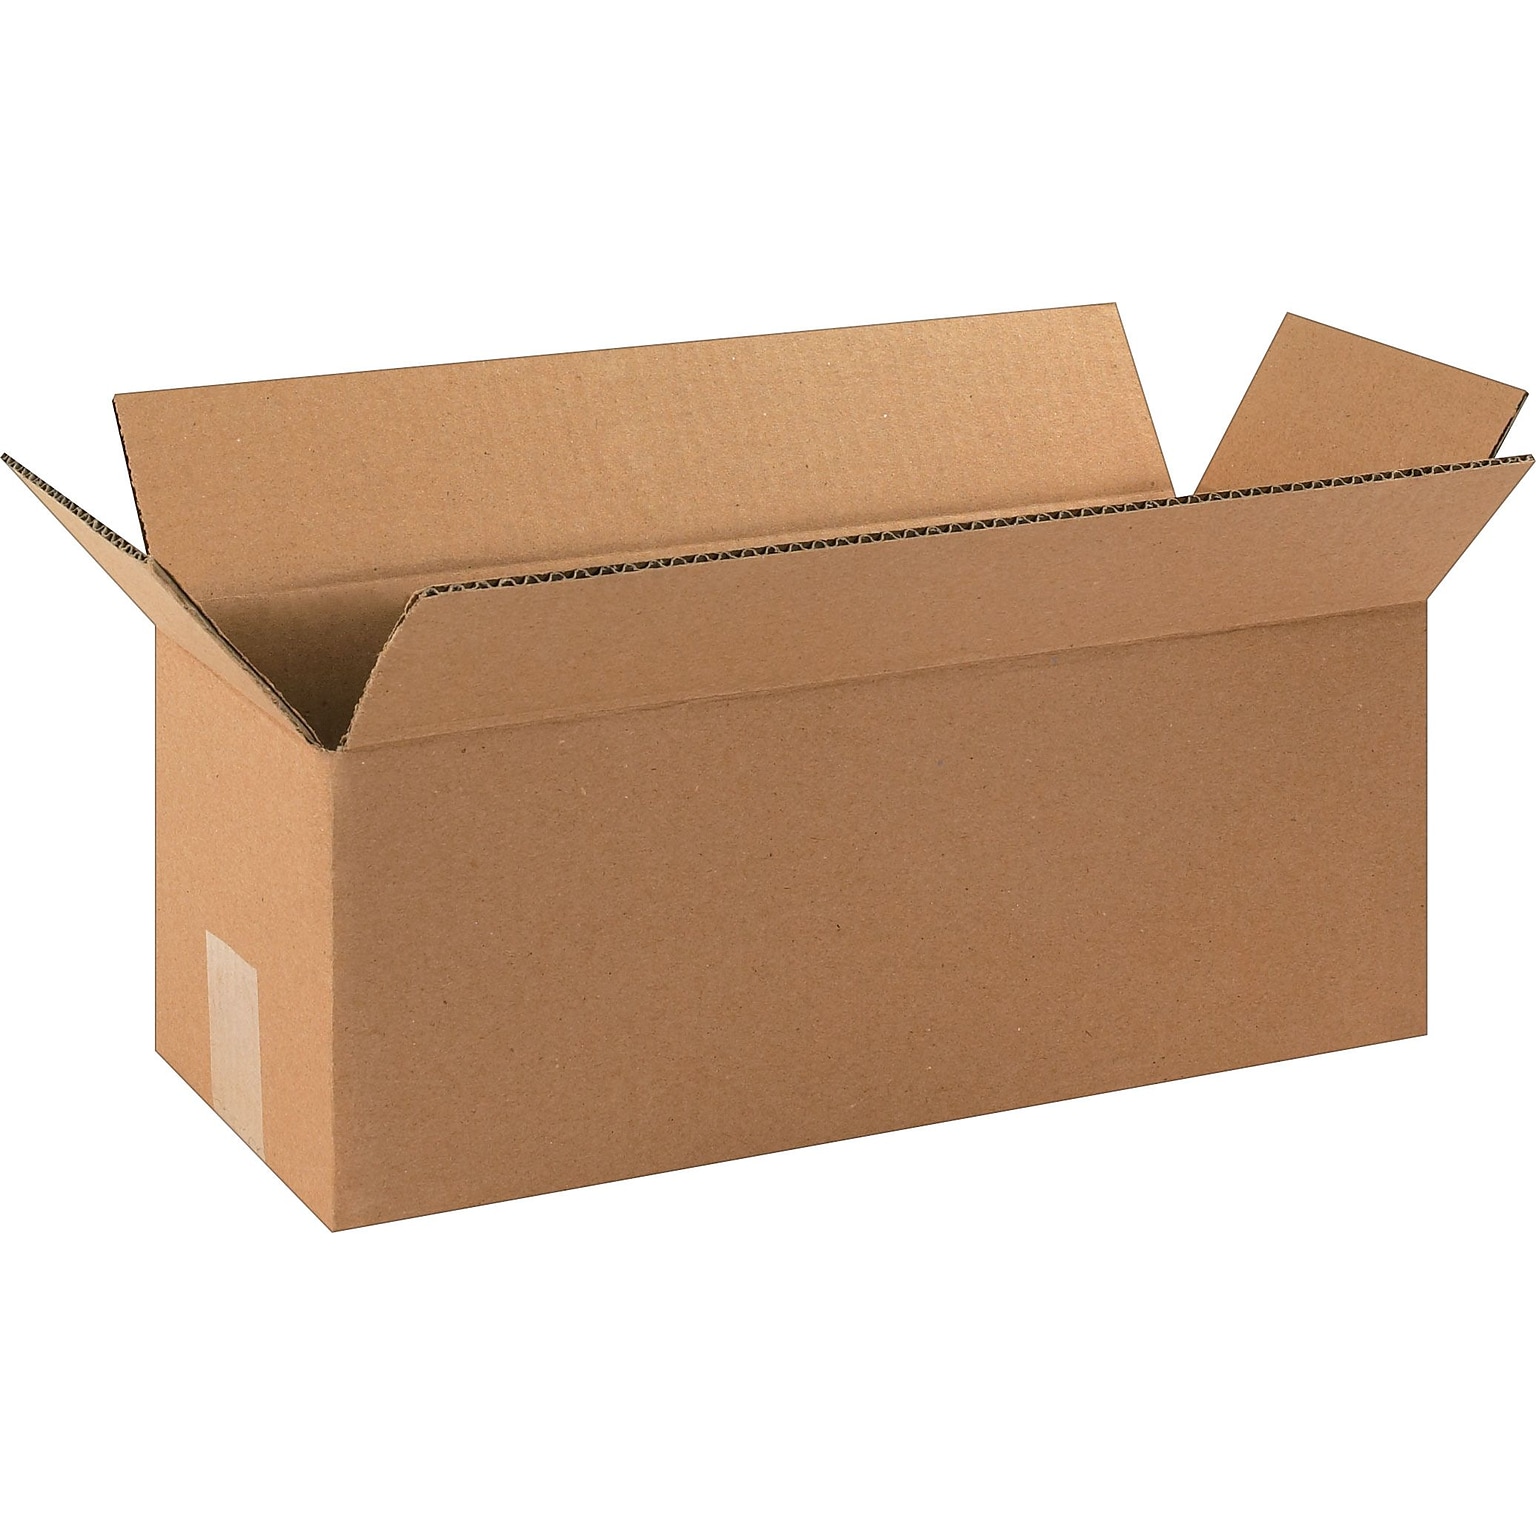 16 x 6 x 6 Shipping Boxes, 32 ECT, Brown, 25/Bundle (1666)